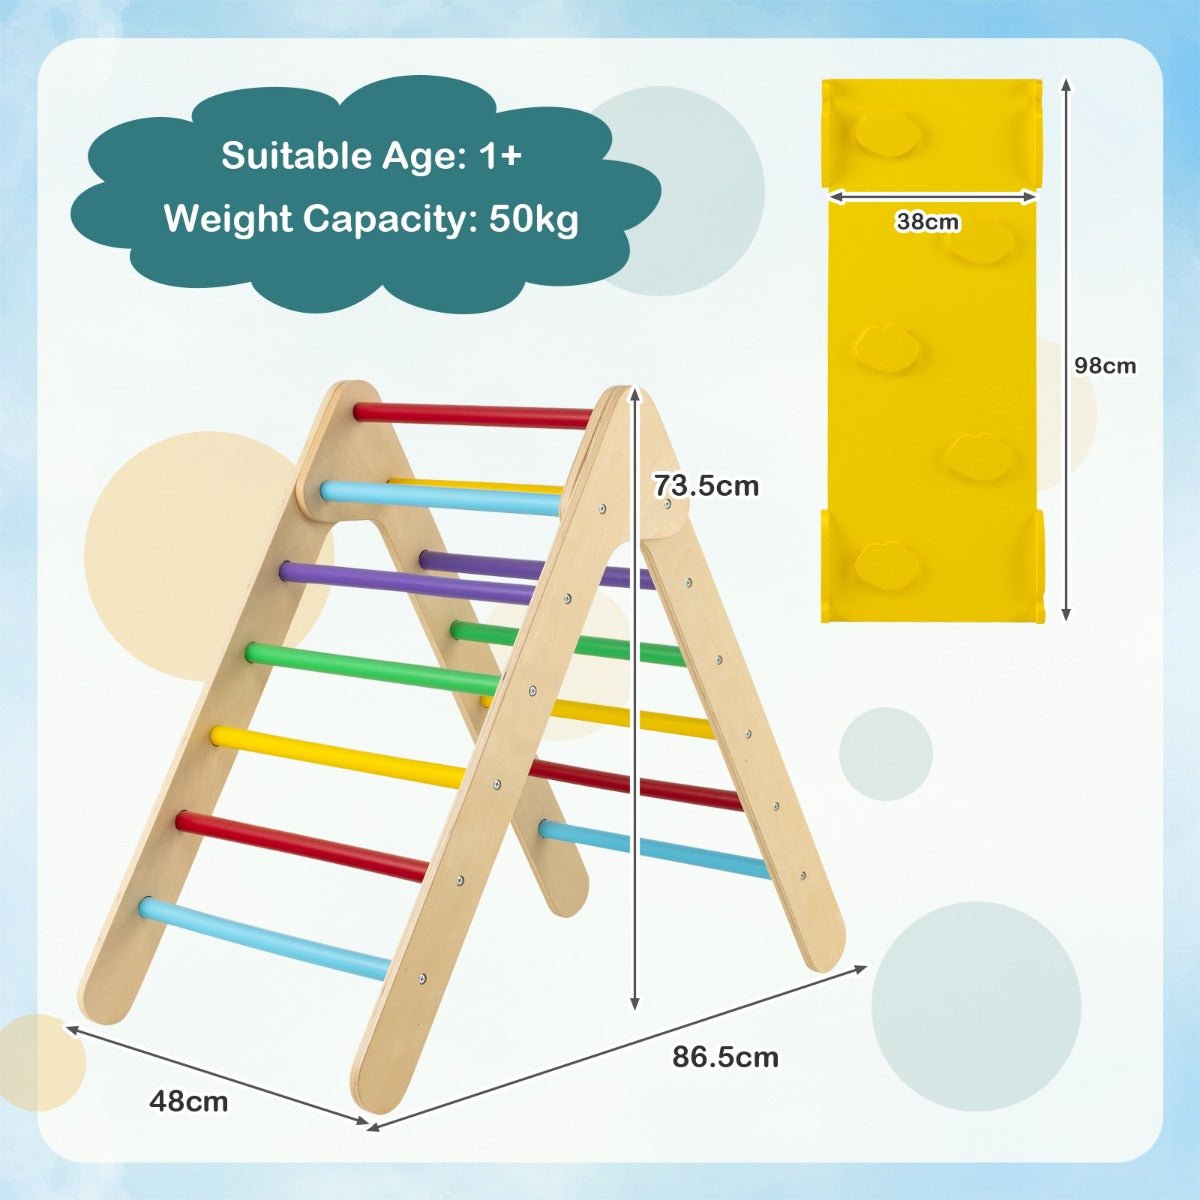 Kid's Wooden Climbing Triangle Set - Slide and Reversible Ramp Fun